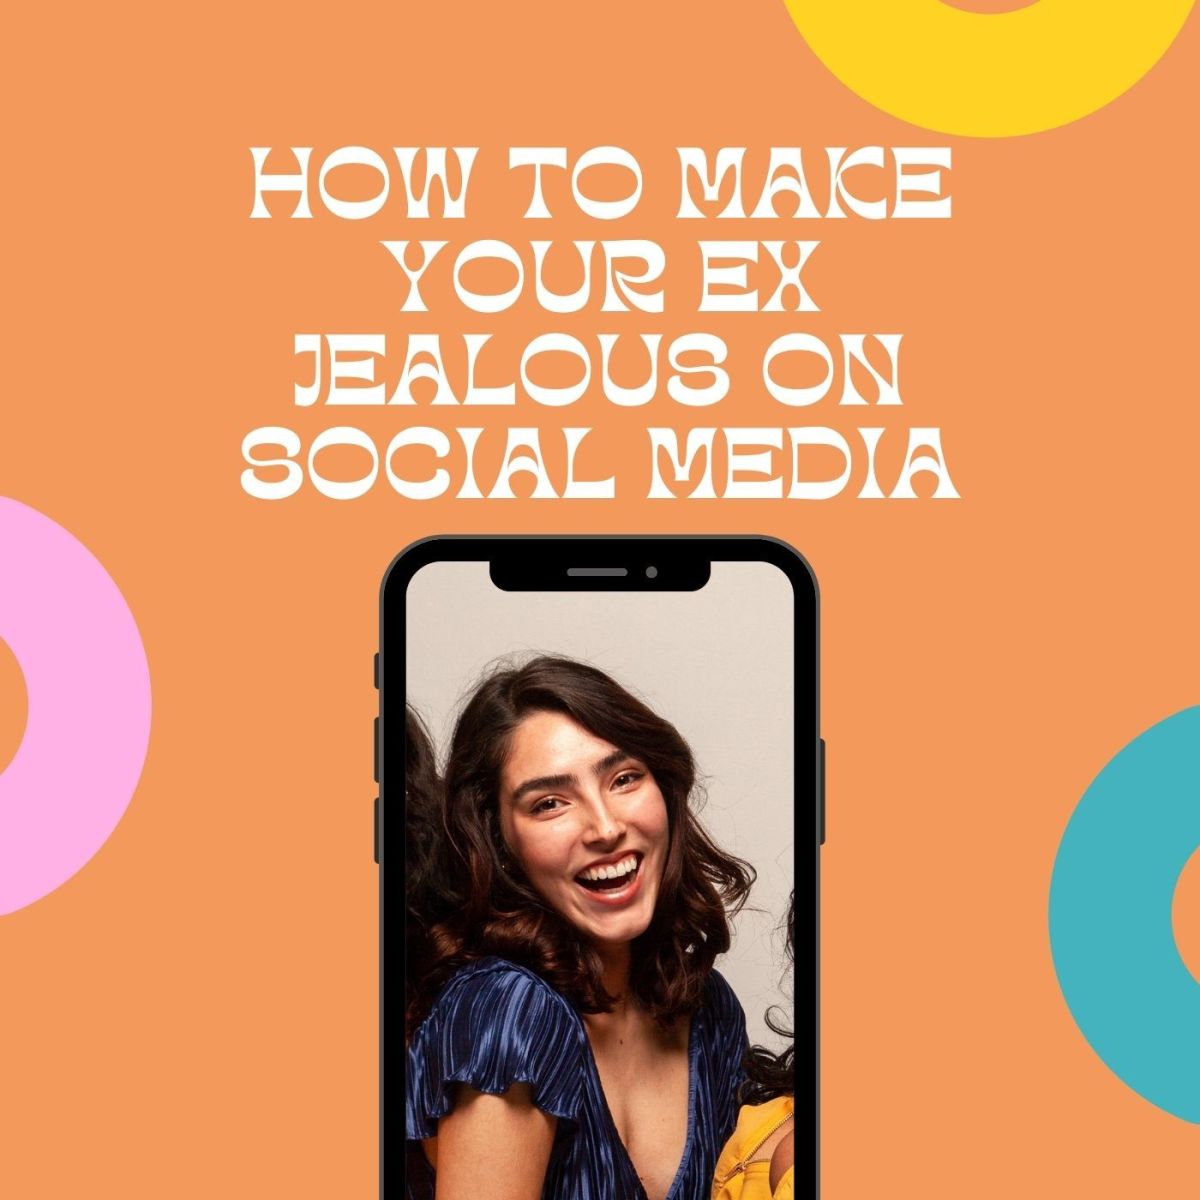 How to Make Your Ex Jealous on Facebook, Twitter, Pinterest, Instagram